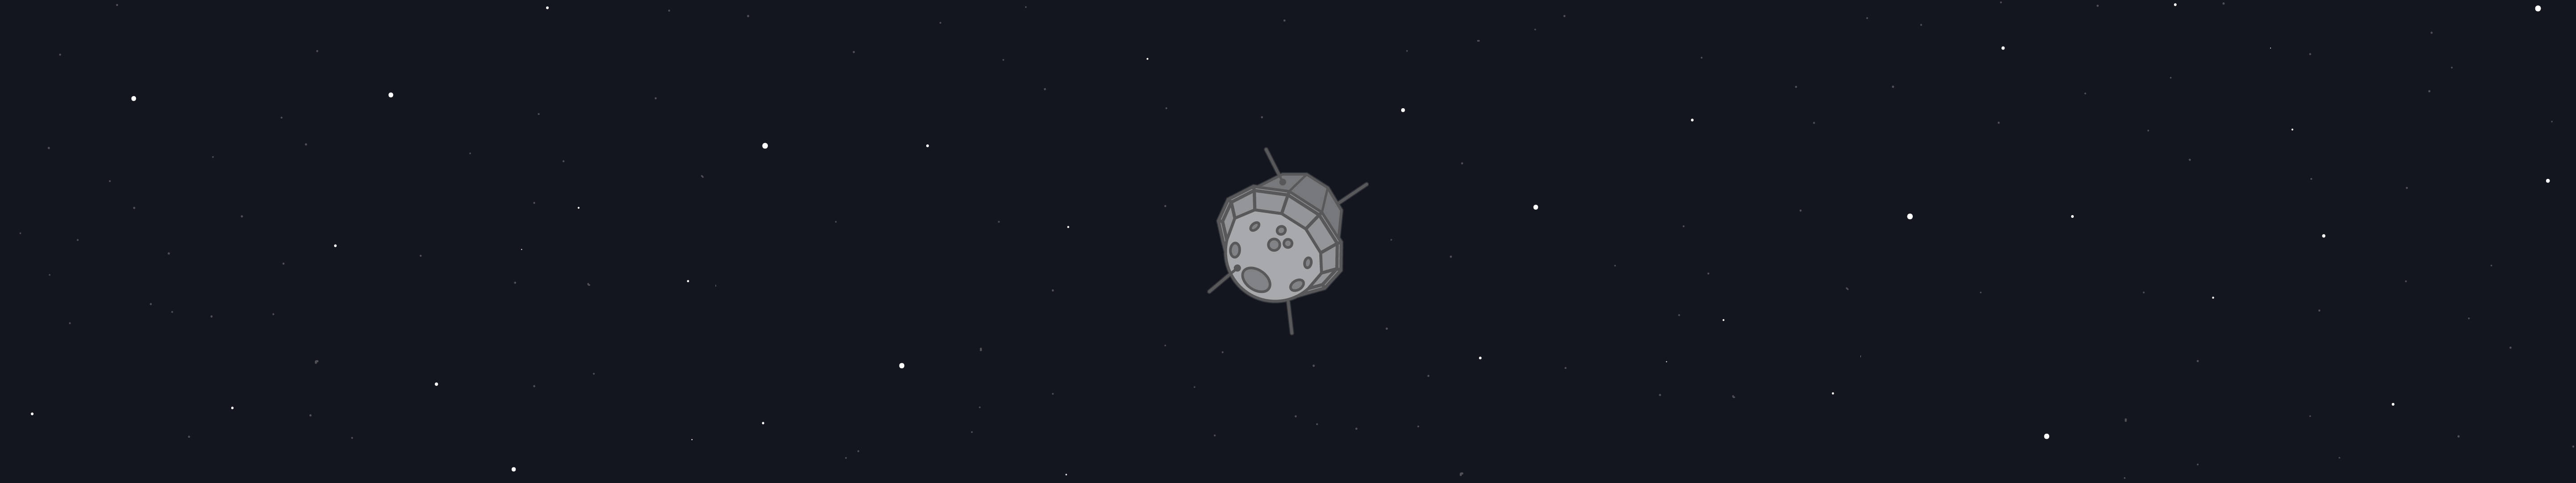 Animated Space Satellite Three Screen Wallpaper